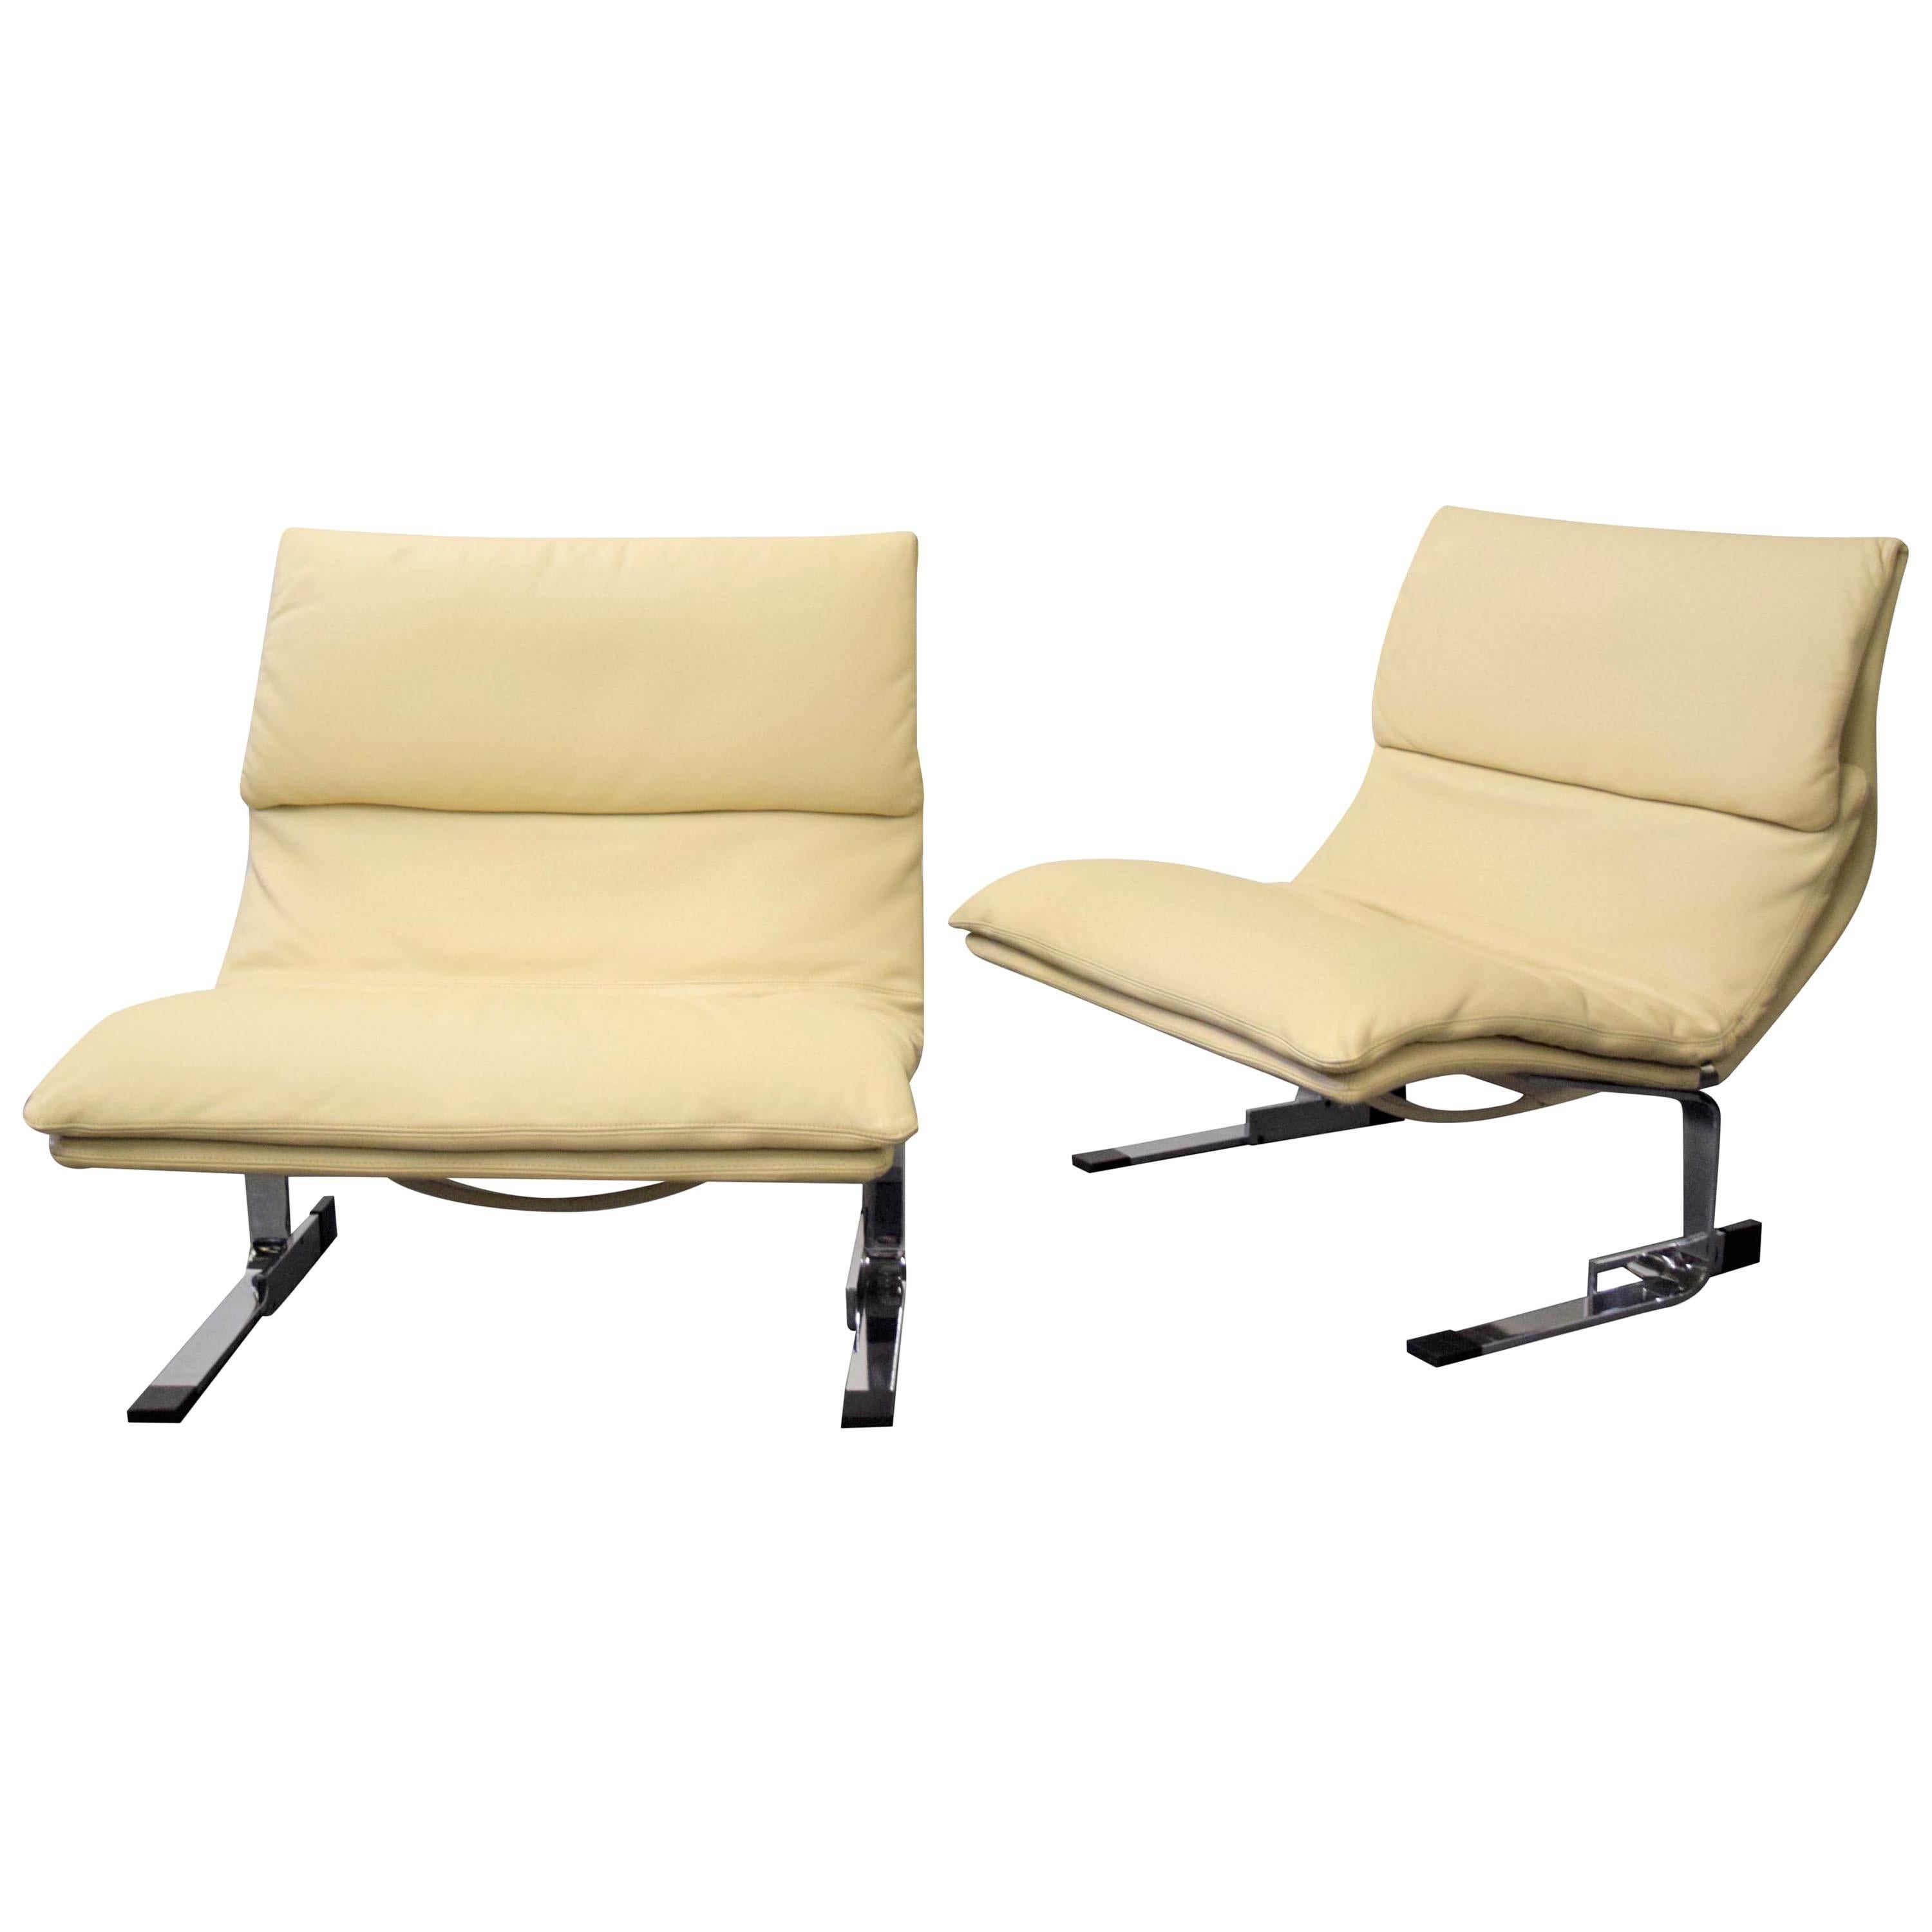 Pair of Leather Saporiti 'Onda' Wave Lounge Chairs